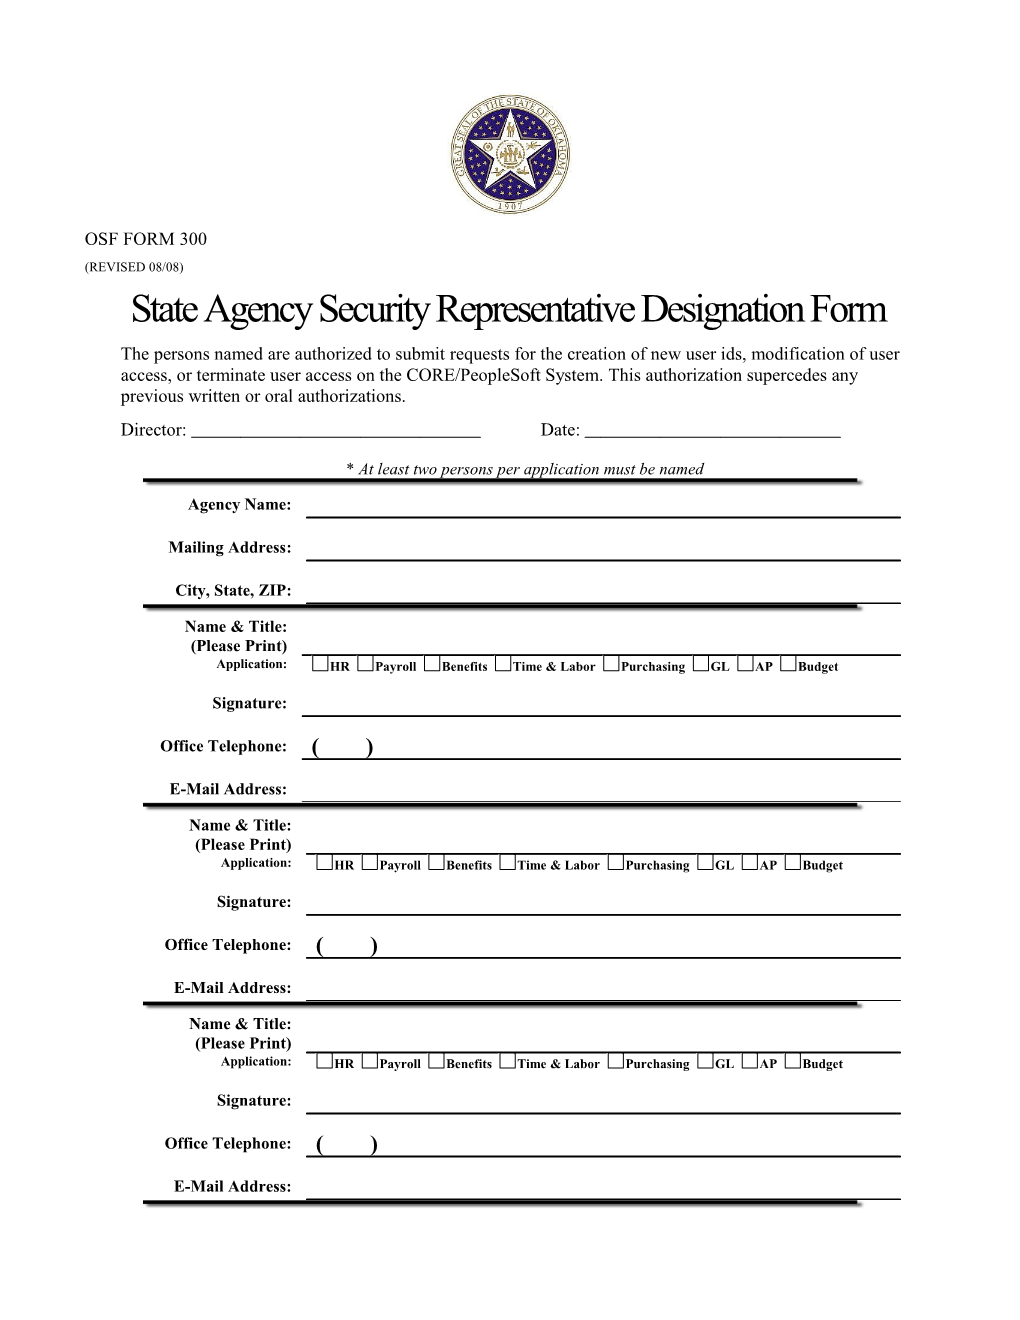 State Agency Security Representative Designation Form